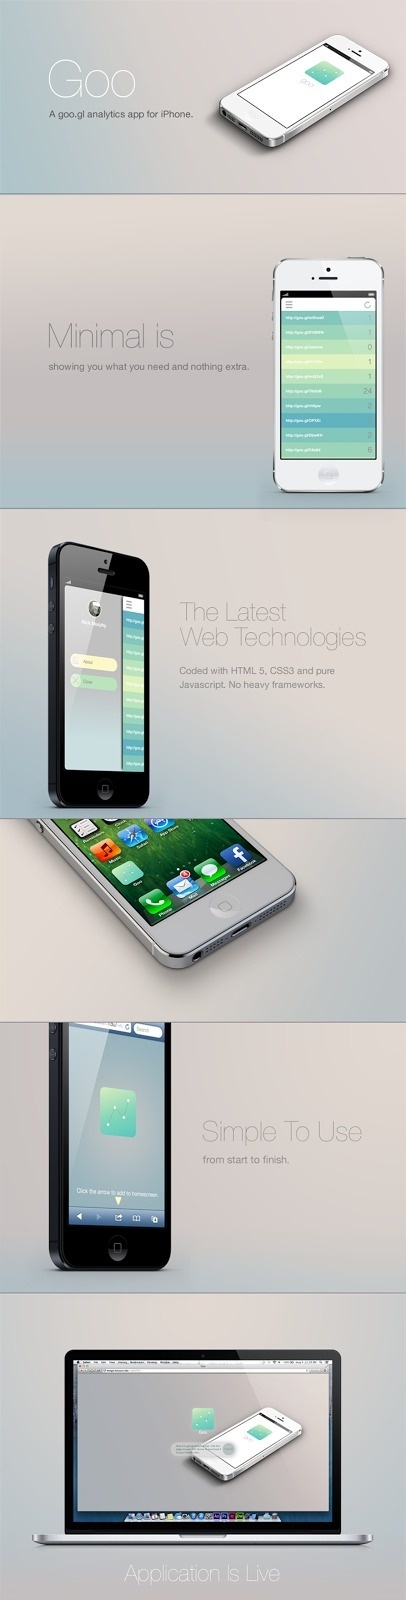 http://www.behance.net/gallery/Goo-App/10214263 #uiux #ux #webapp #design #ui #iphone #app #mobile #minimal #ios